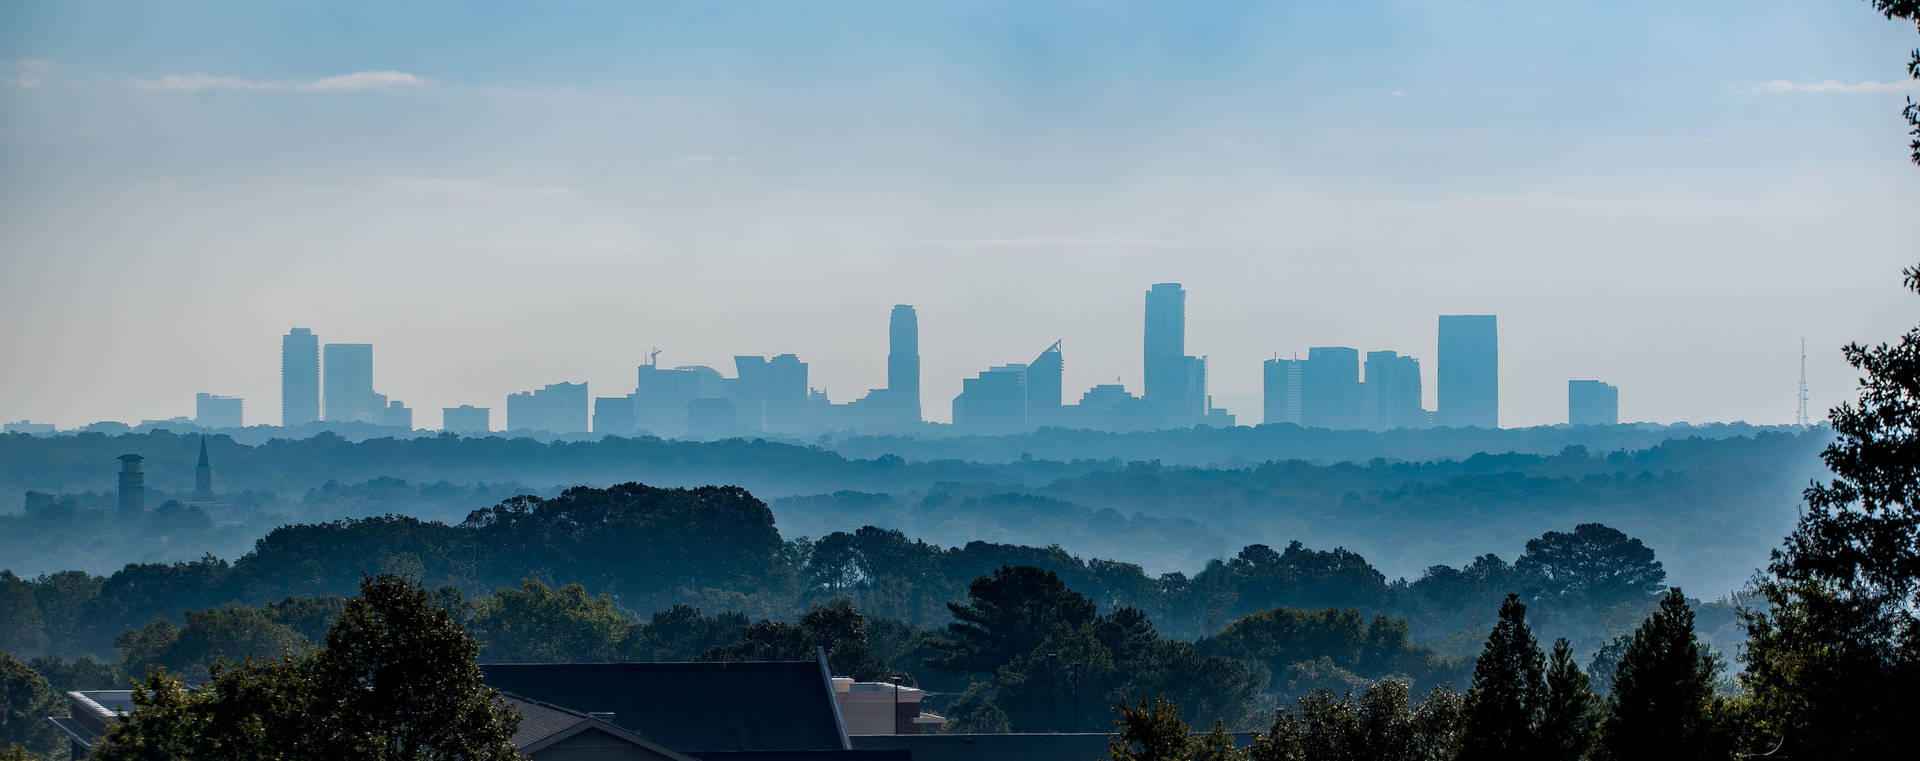 City Of Atlanta Skyline Background